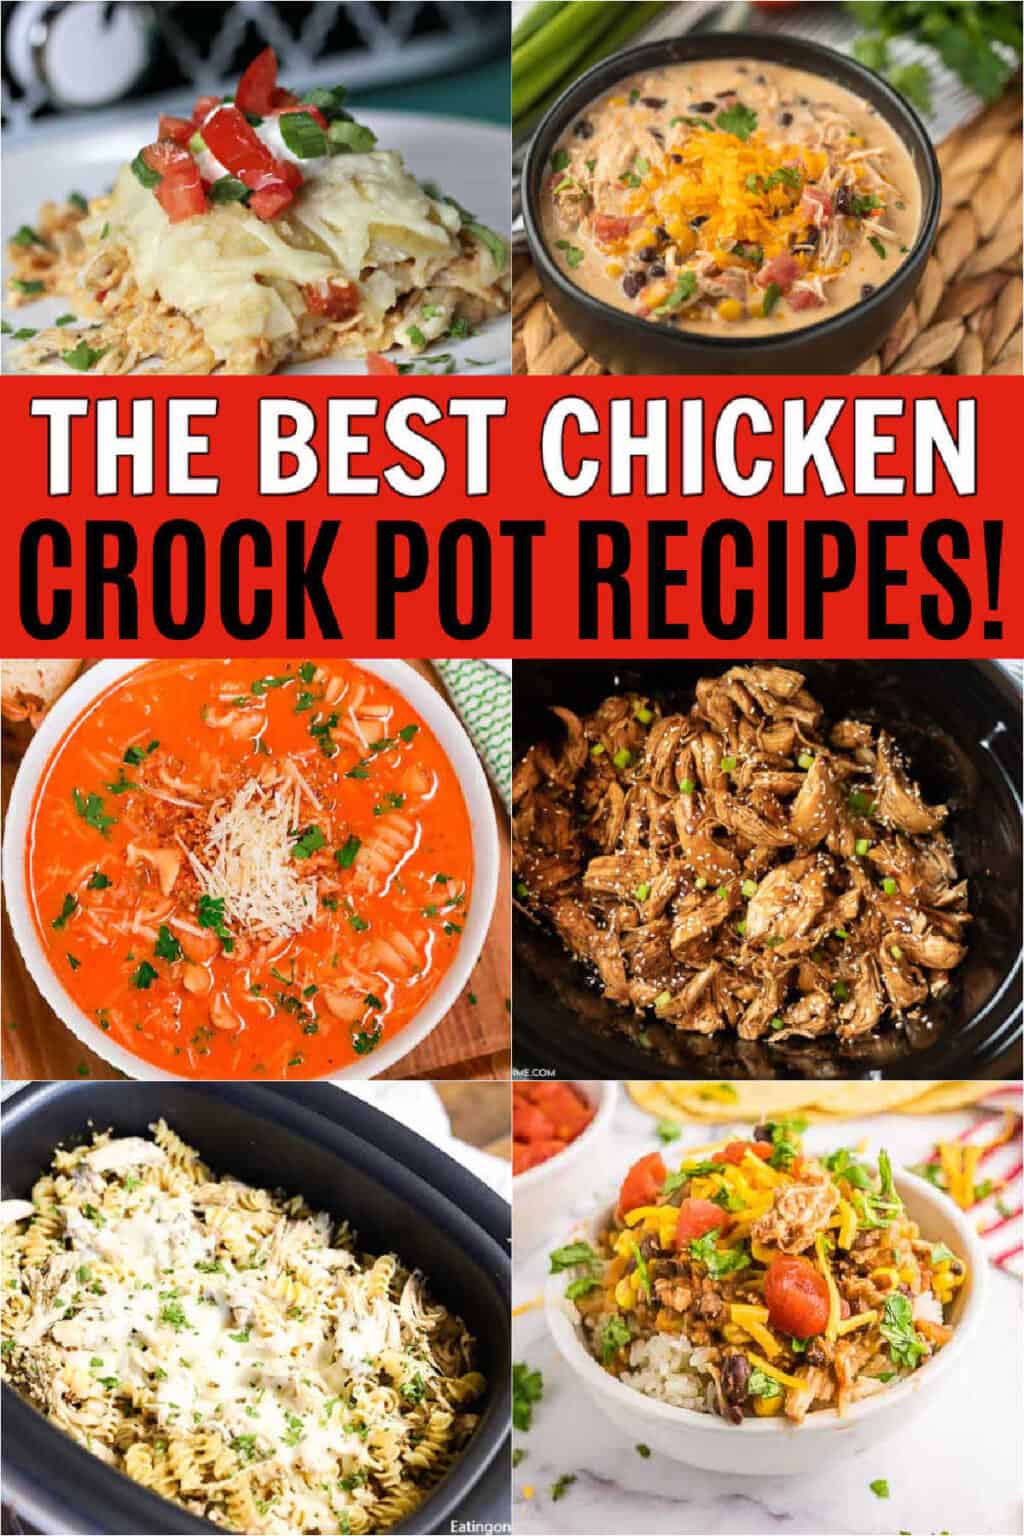 Crock pot chicken recipes - easy slow cooker chicken recipes